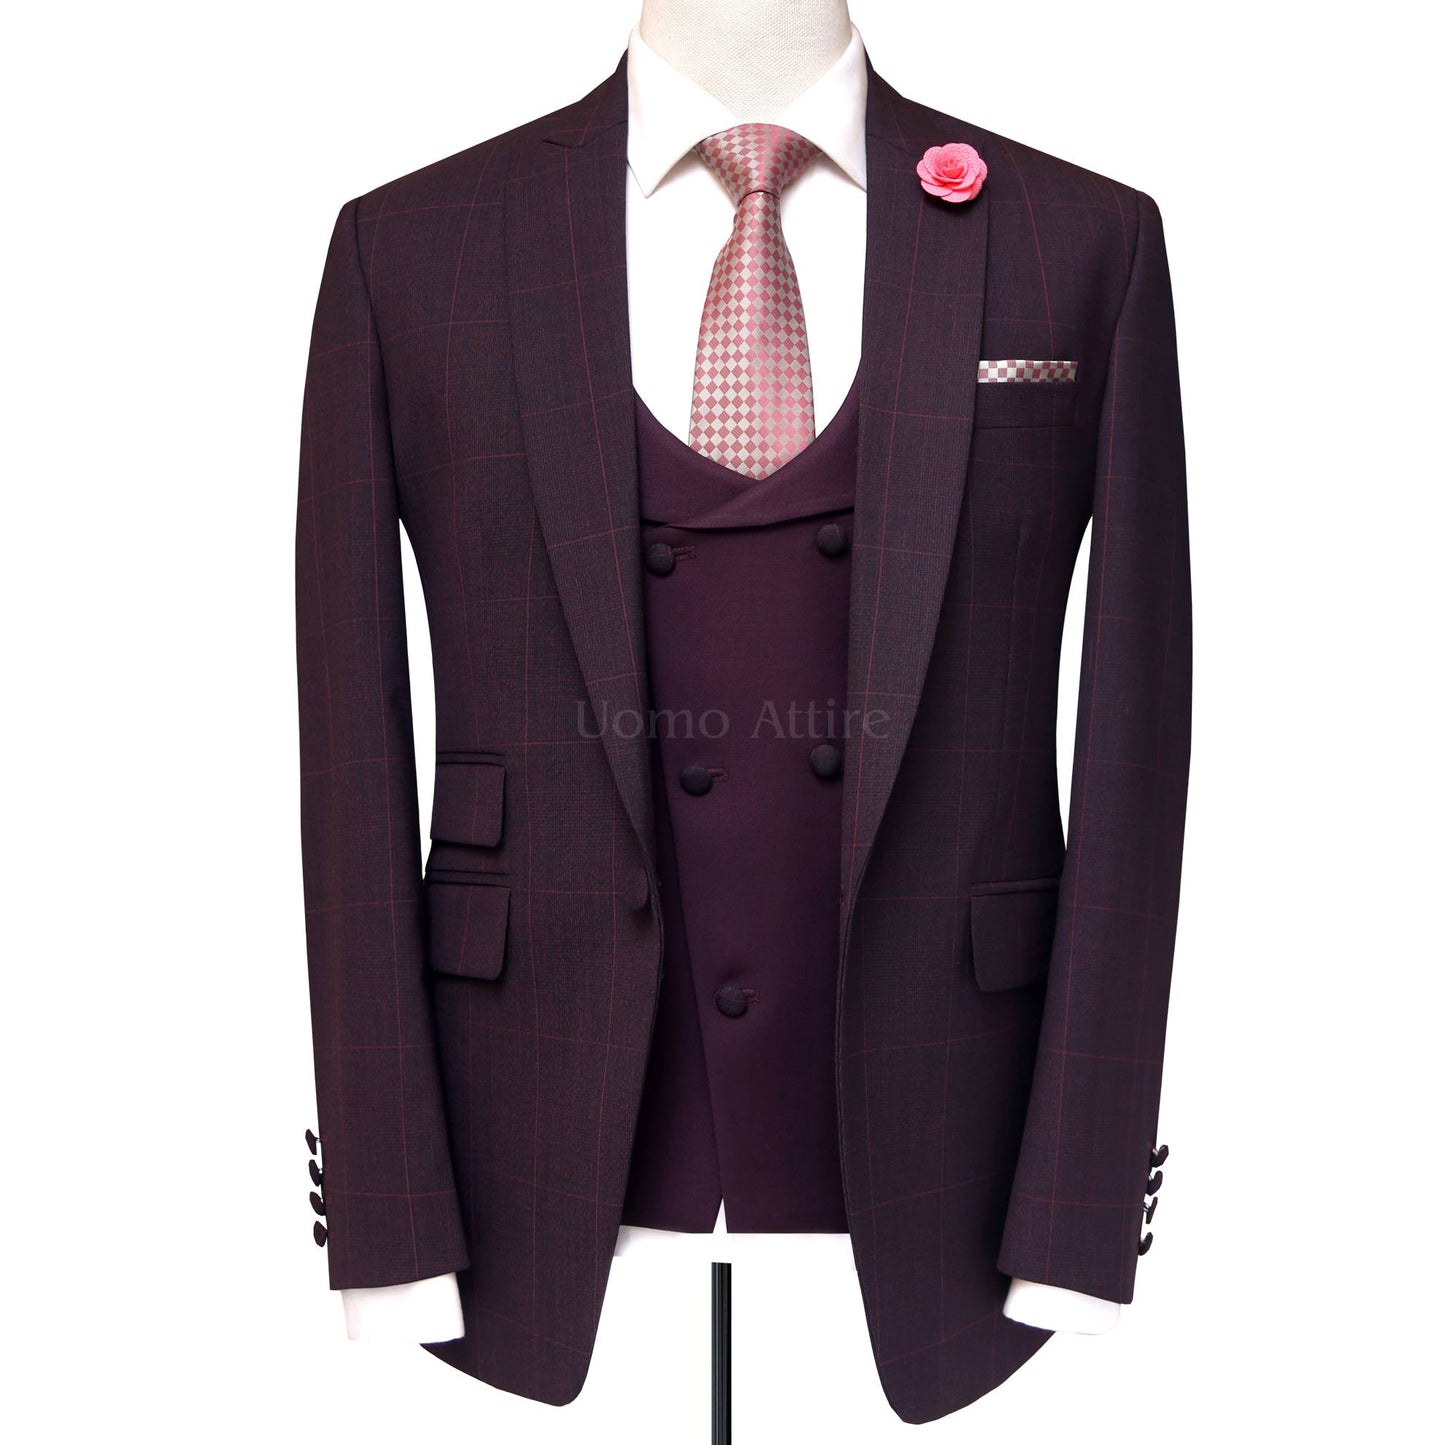 Windowpane Glen Check Burgundy Wedding Suits For Men | Burgundy Color Suit